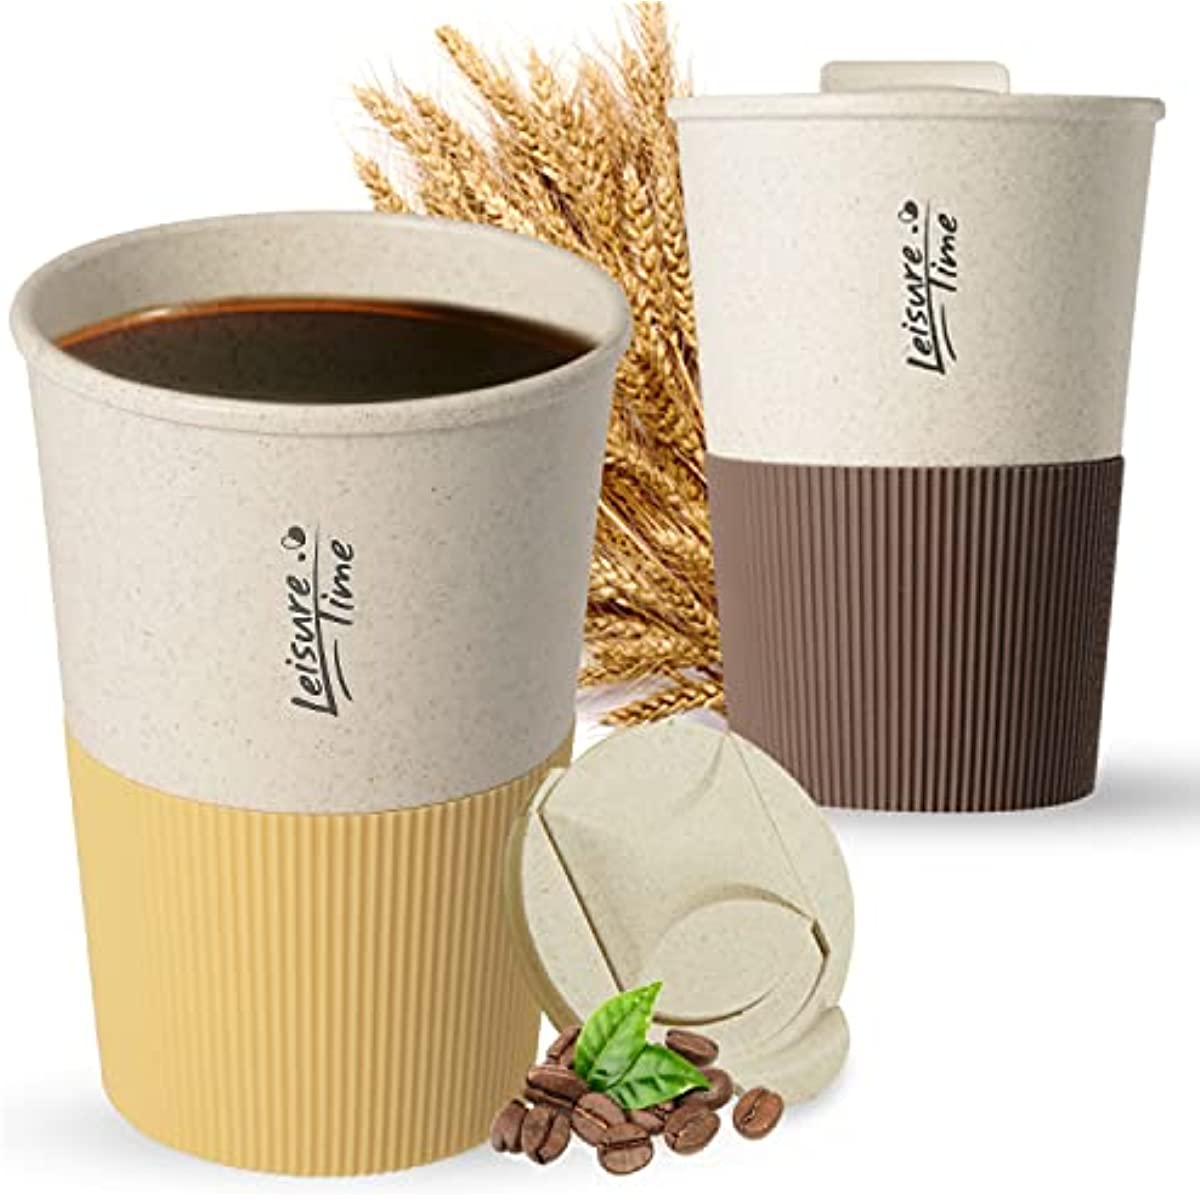 Spill Proof Leak Proof Insulated Coffee Mug